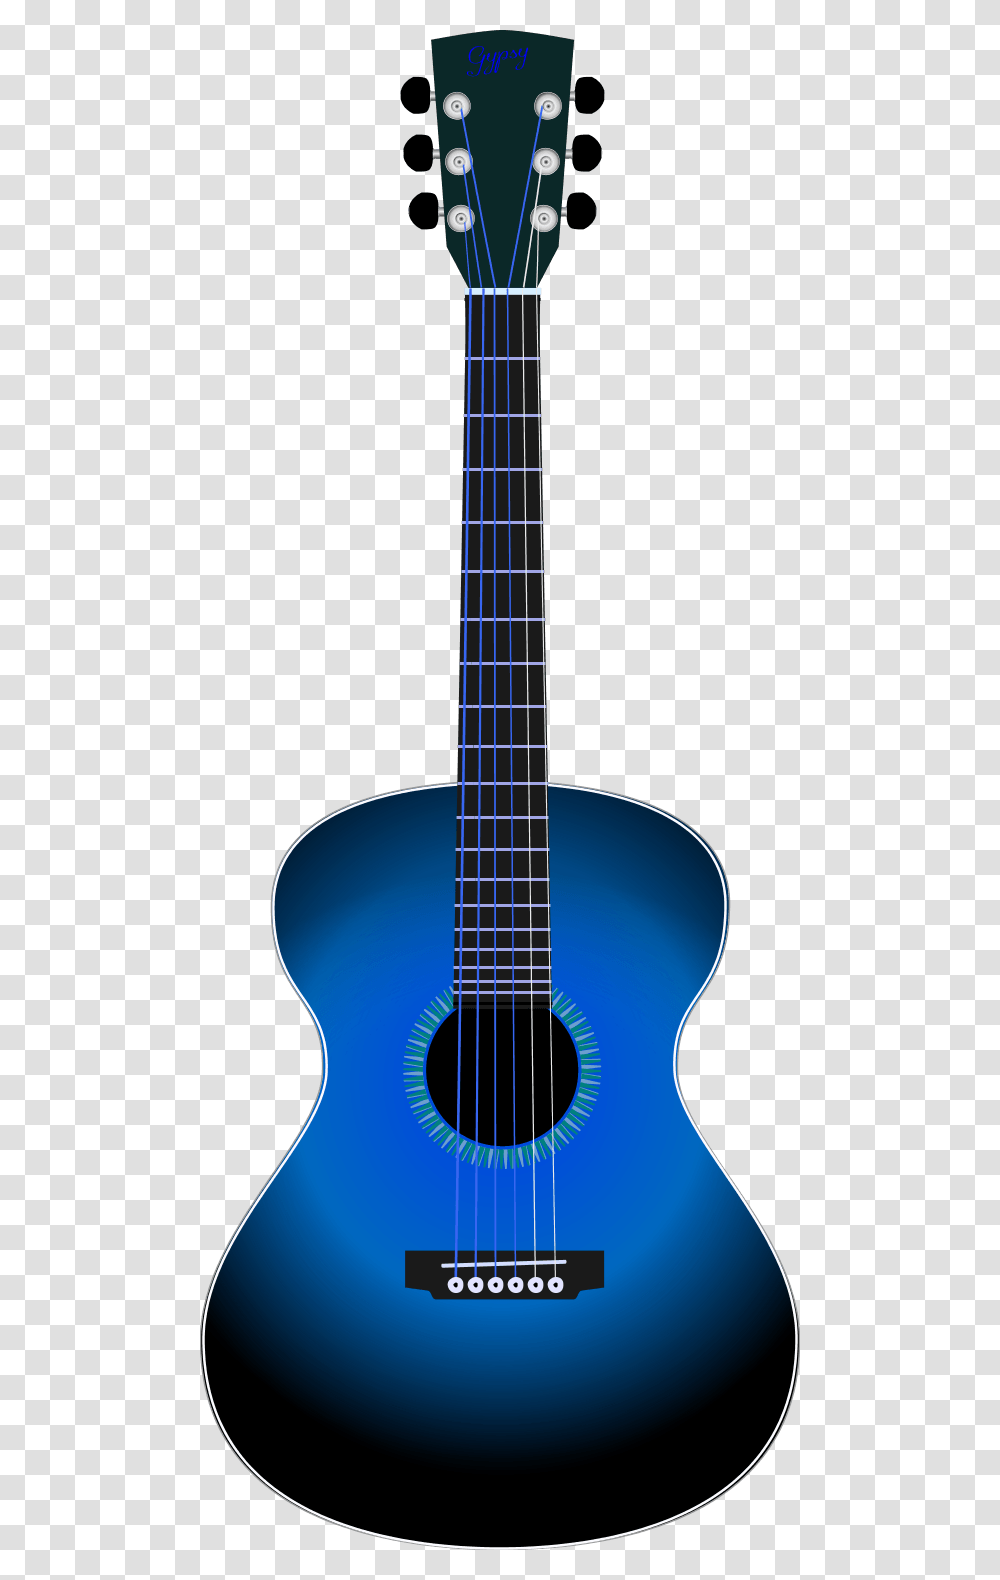 Blue Guitar Clipart Acoustic Guitar Clipart, Leisure Activities, Musical Instrument, Bass Guitar, Electric Guitar Transparent Png